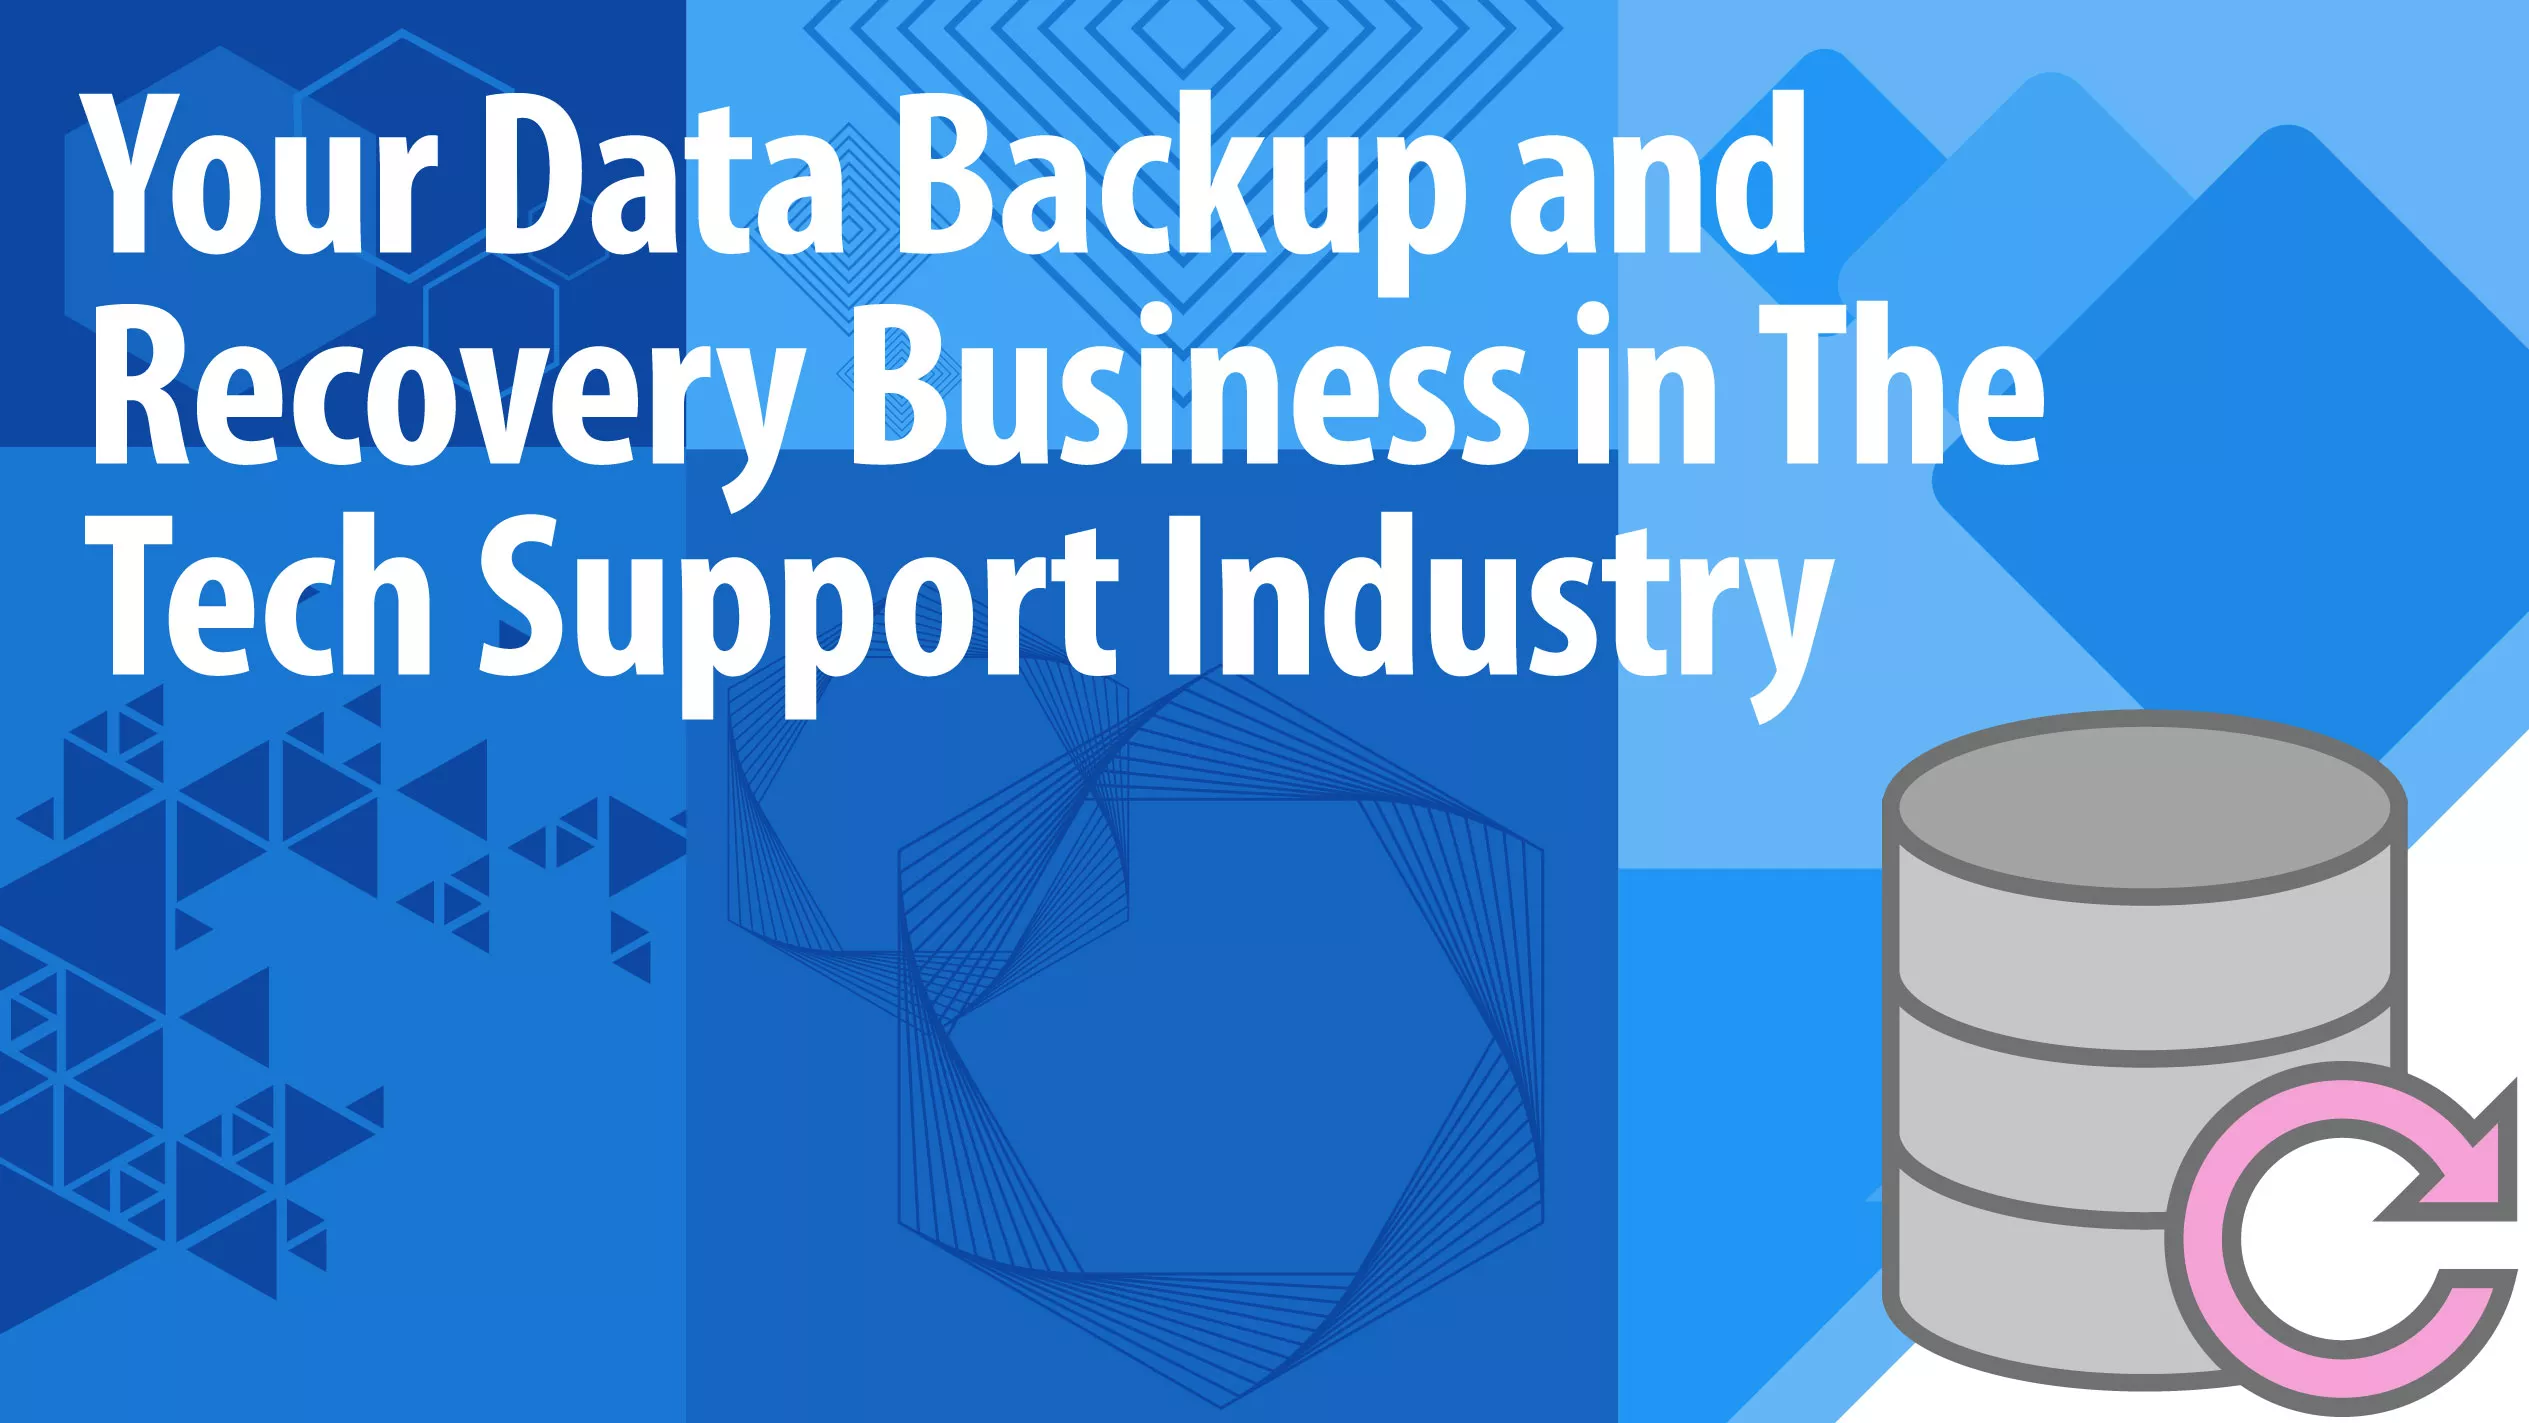 Tech Support Data Backup Article Header